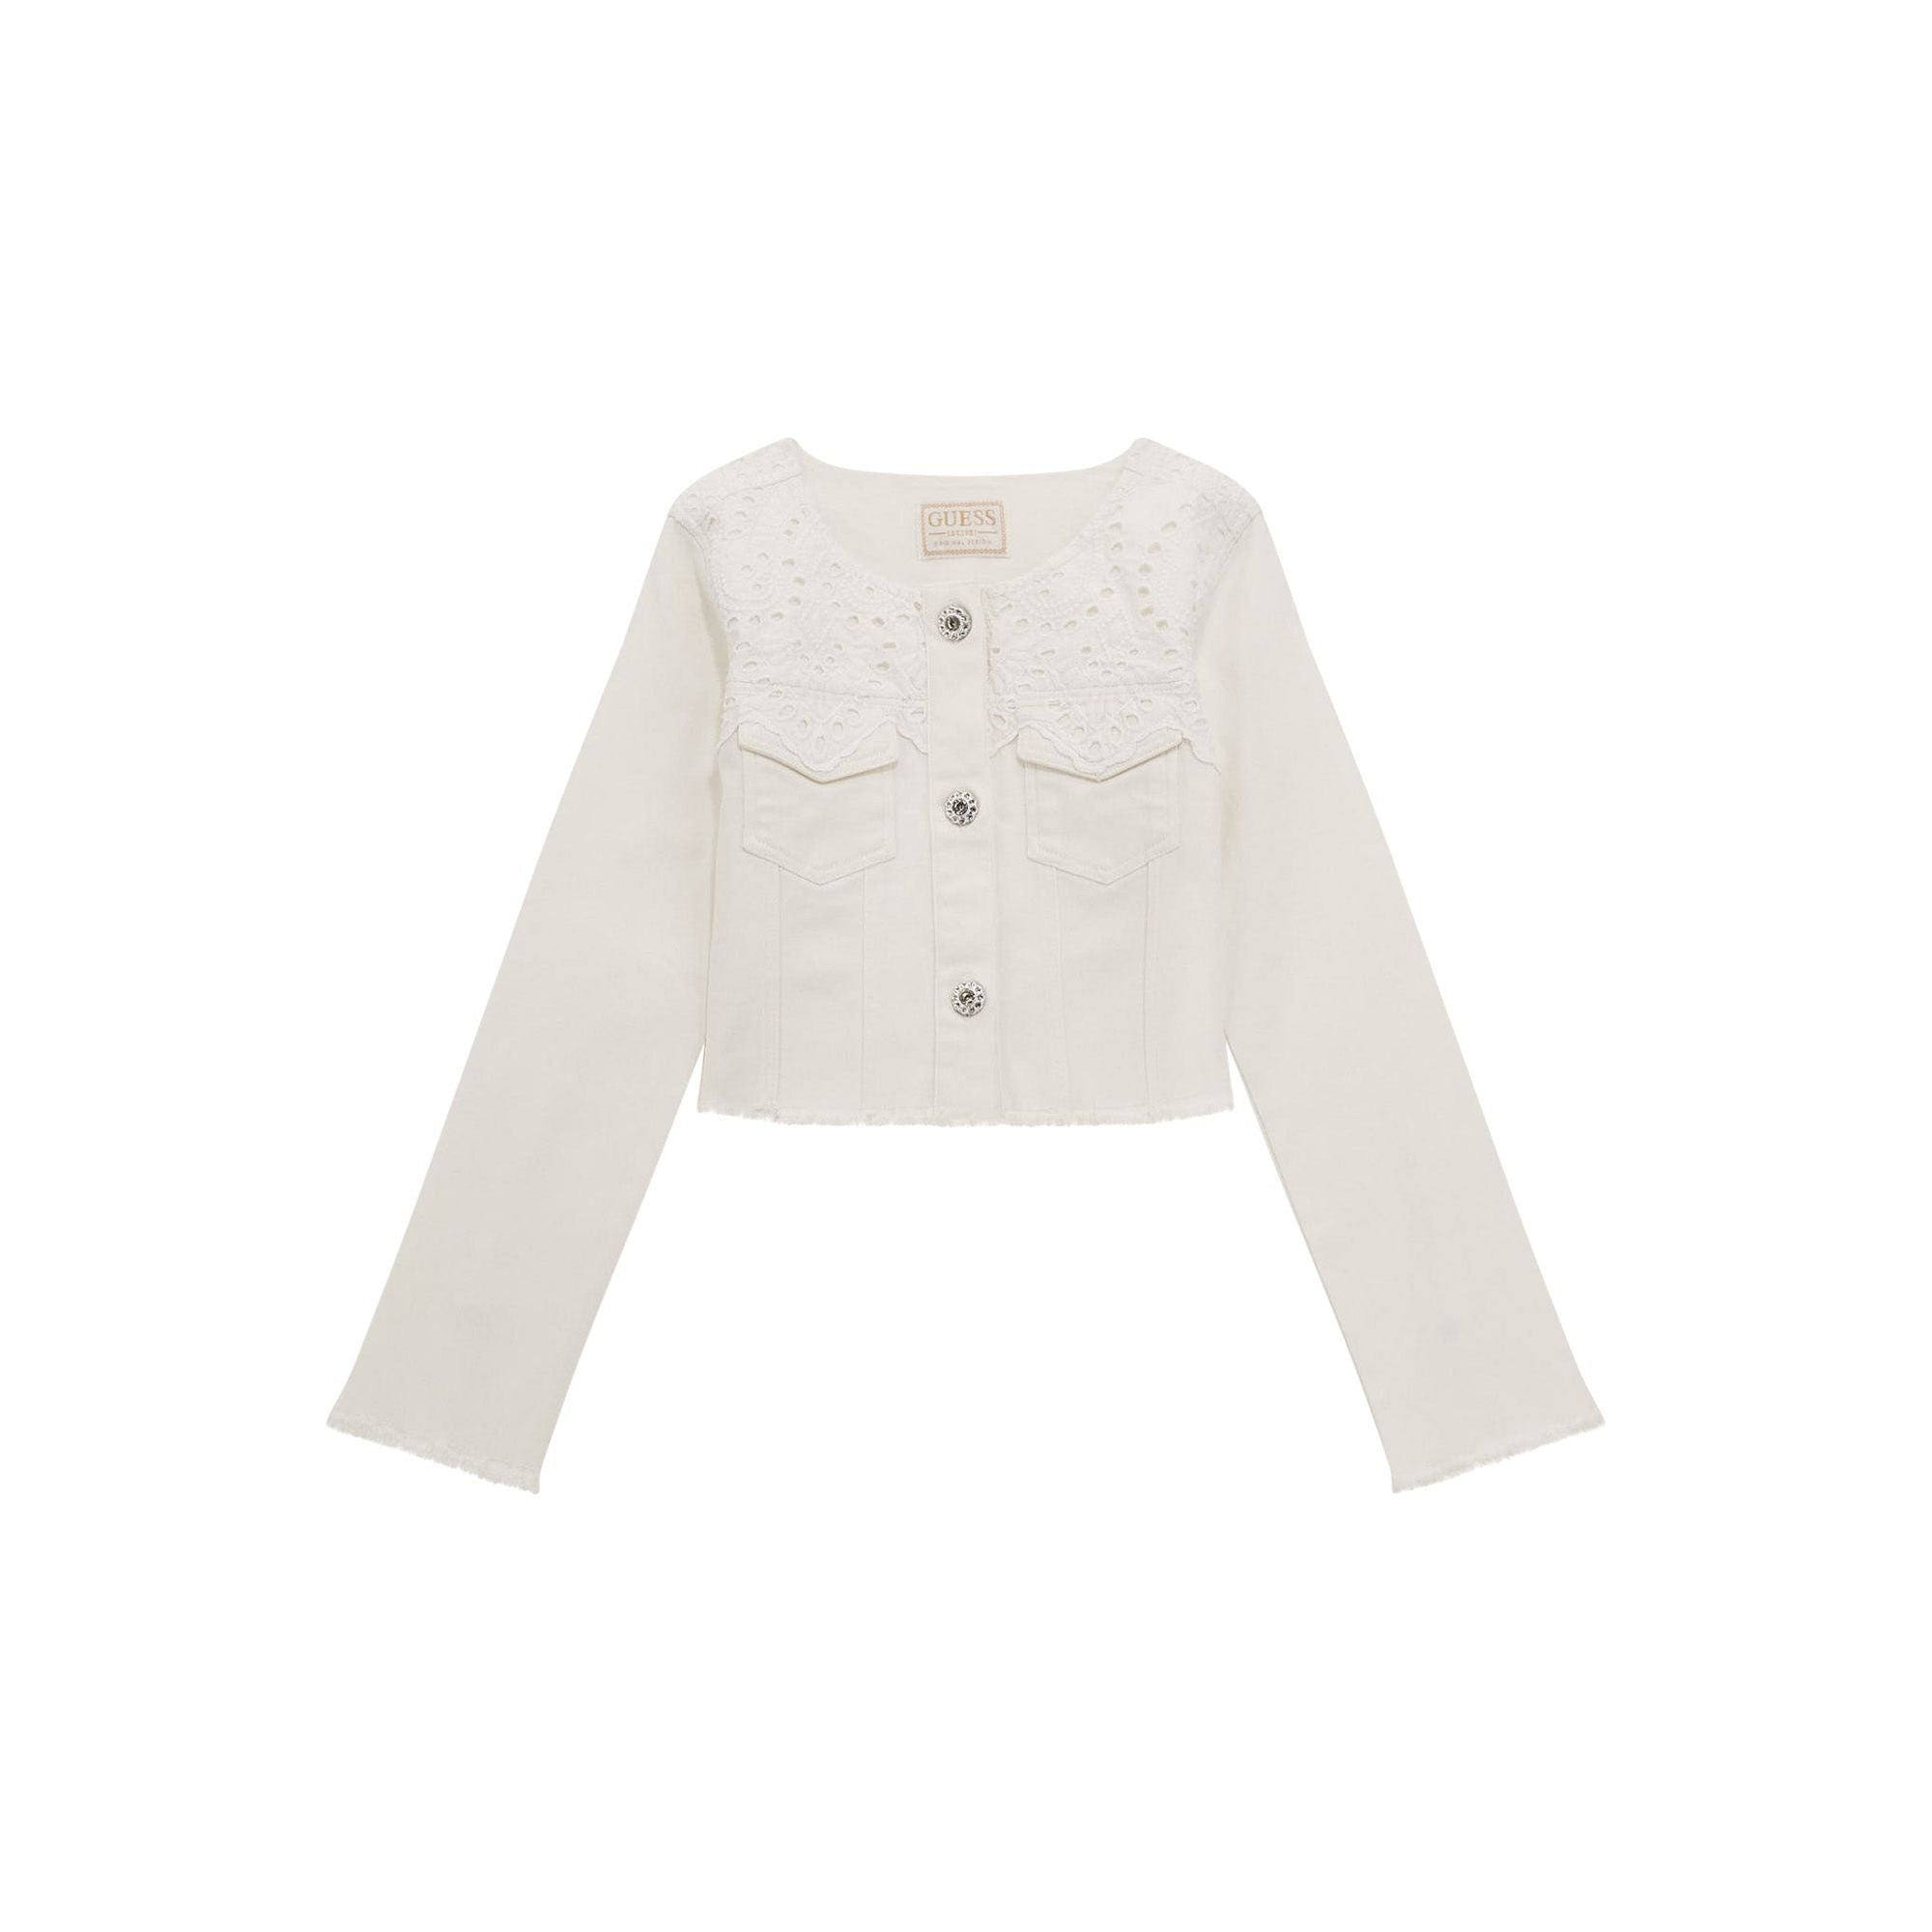 Guess - Girls Denim Jacket in Cream White